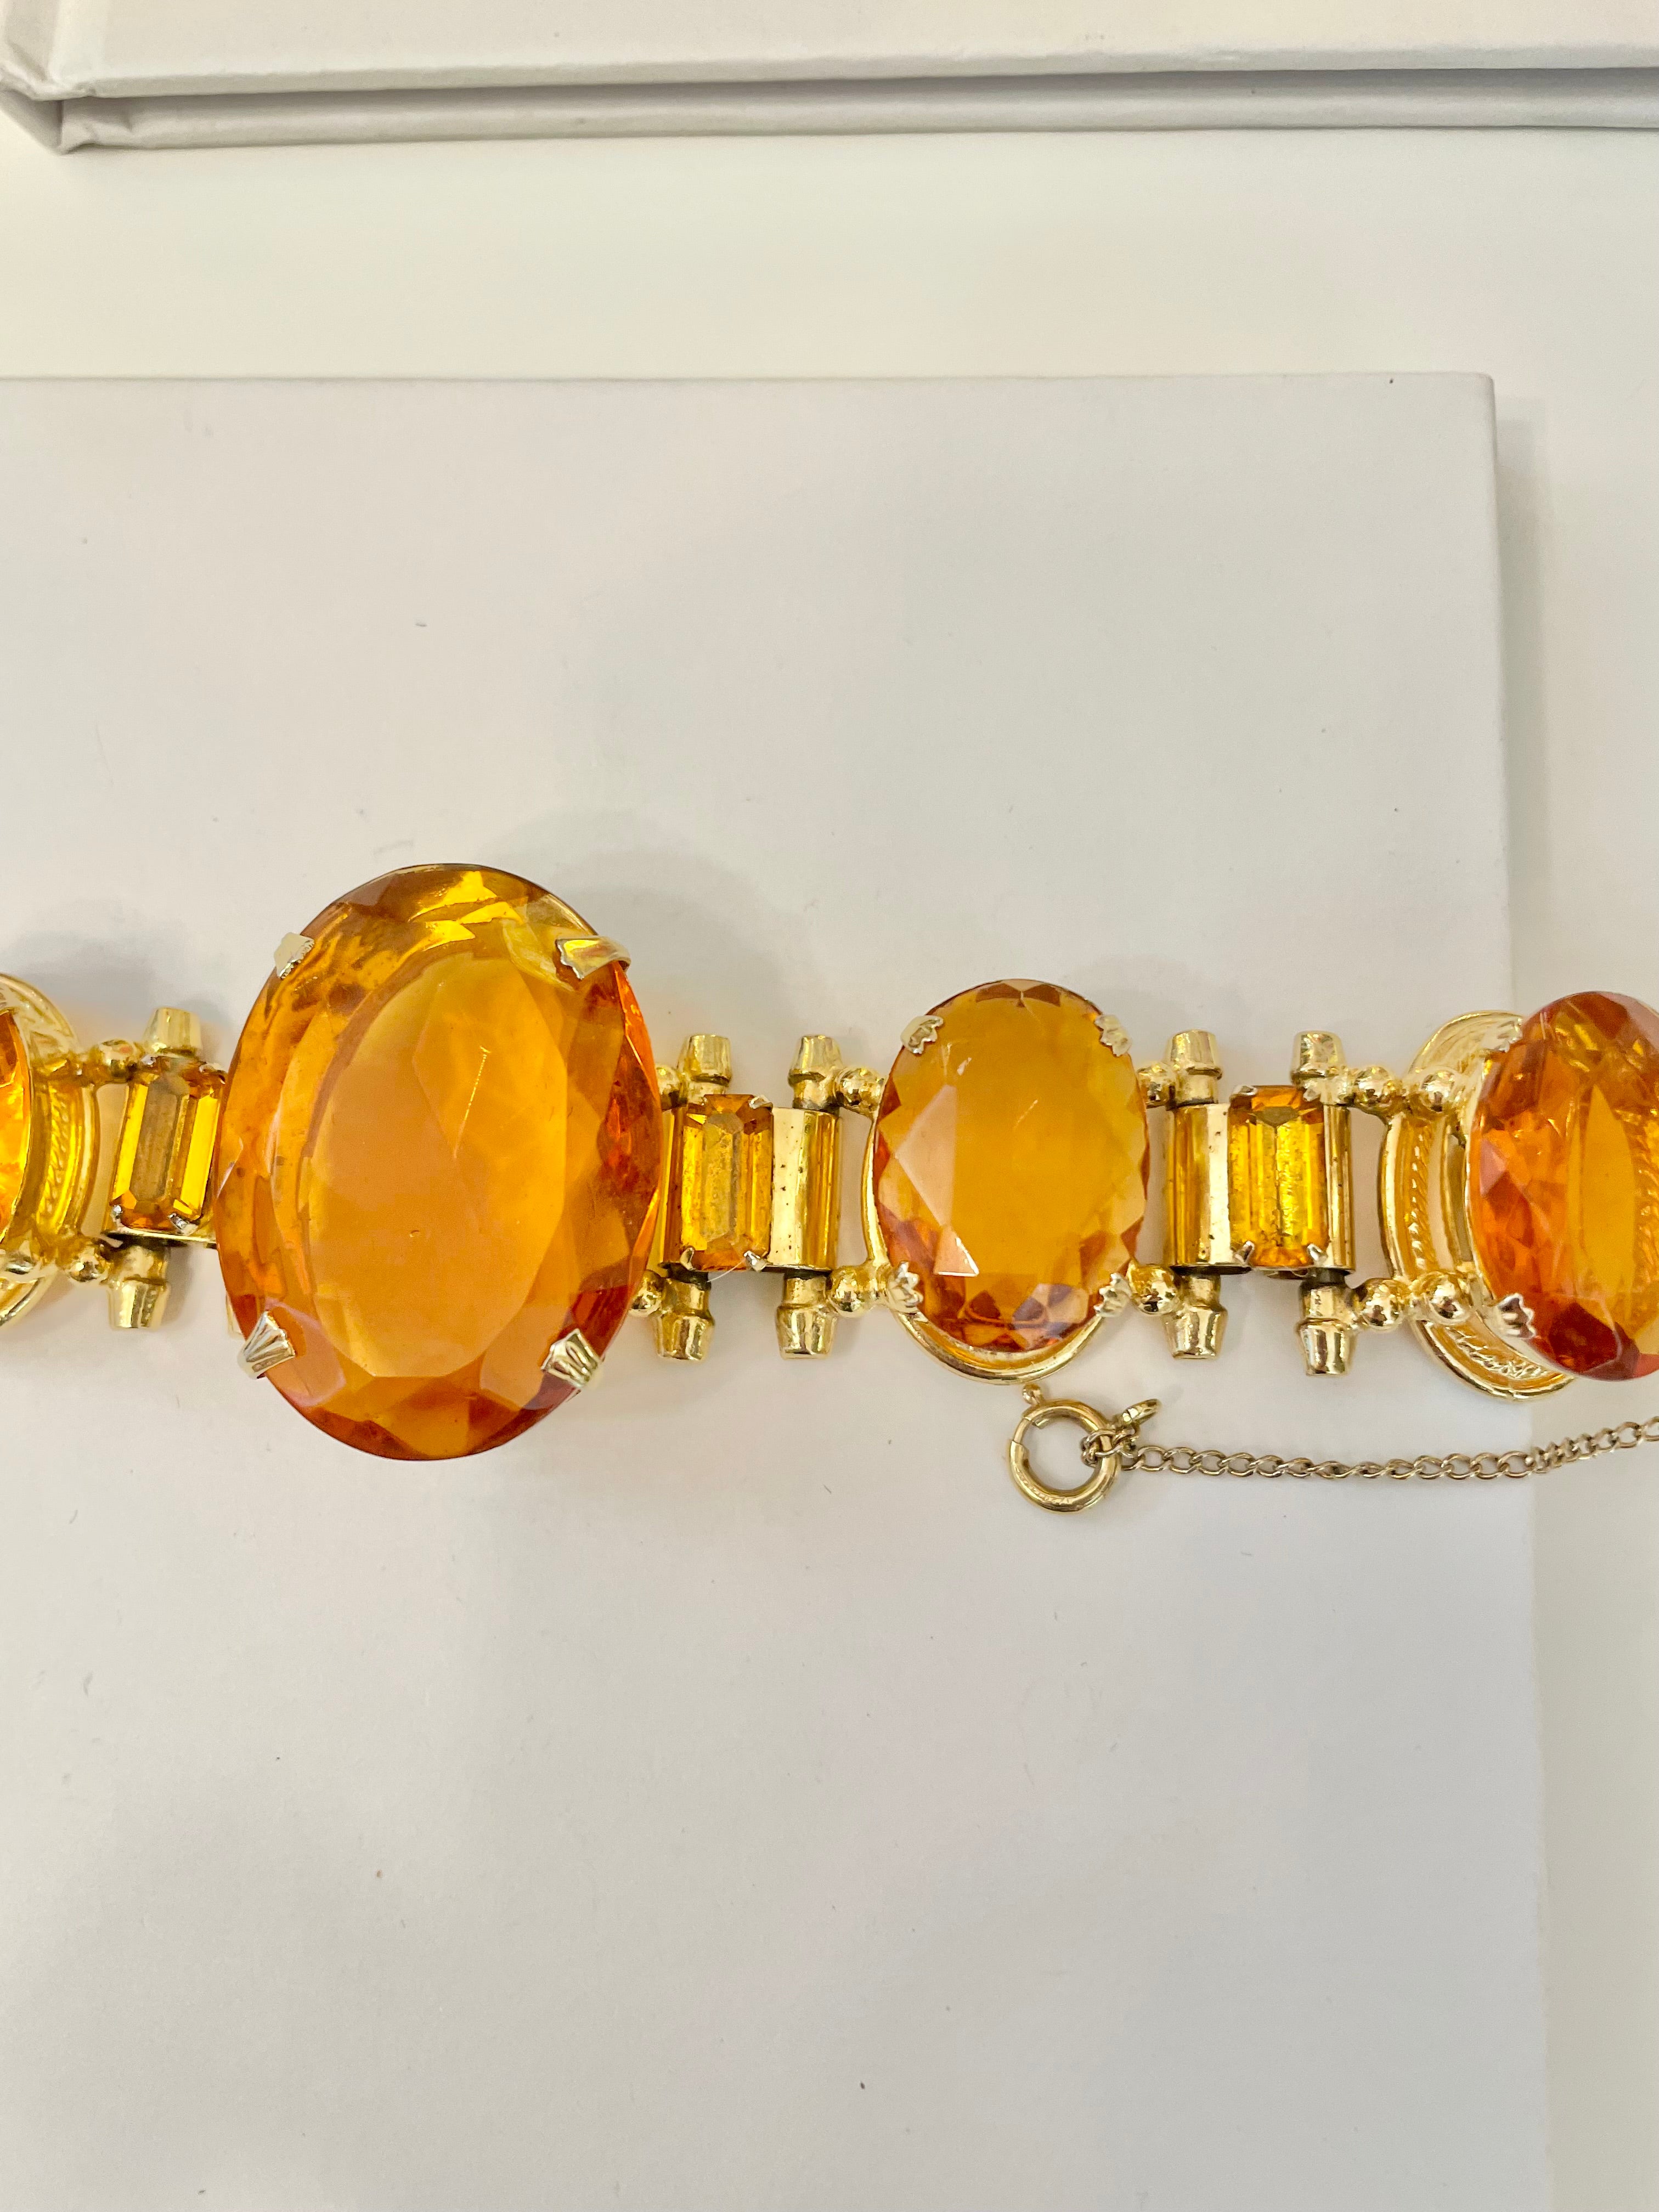 1960's stunning, and glamorous faux orange citrine glass bracelet....so elegant.